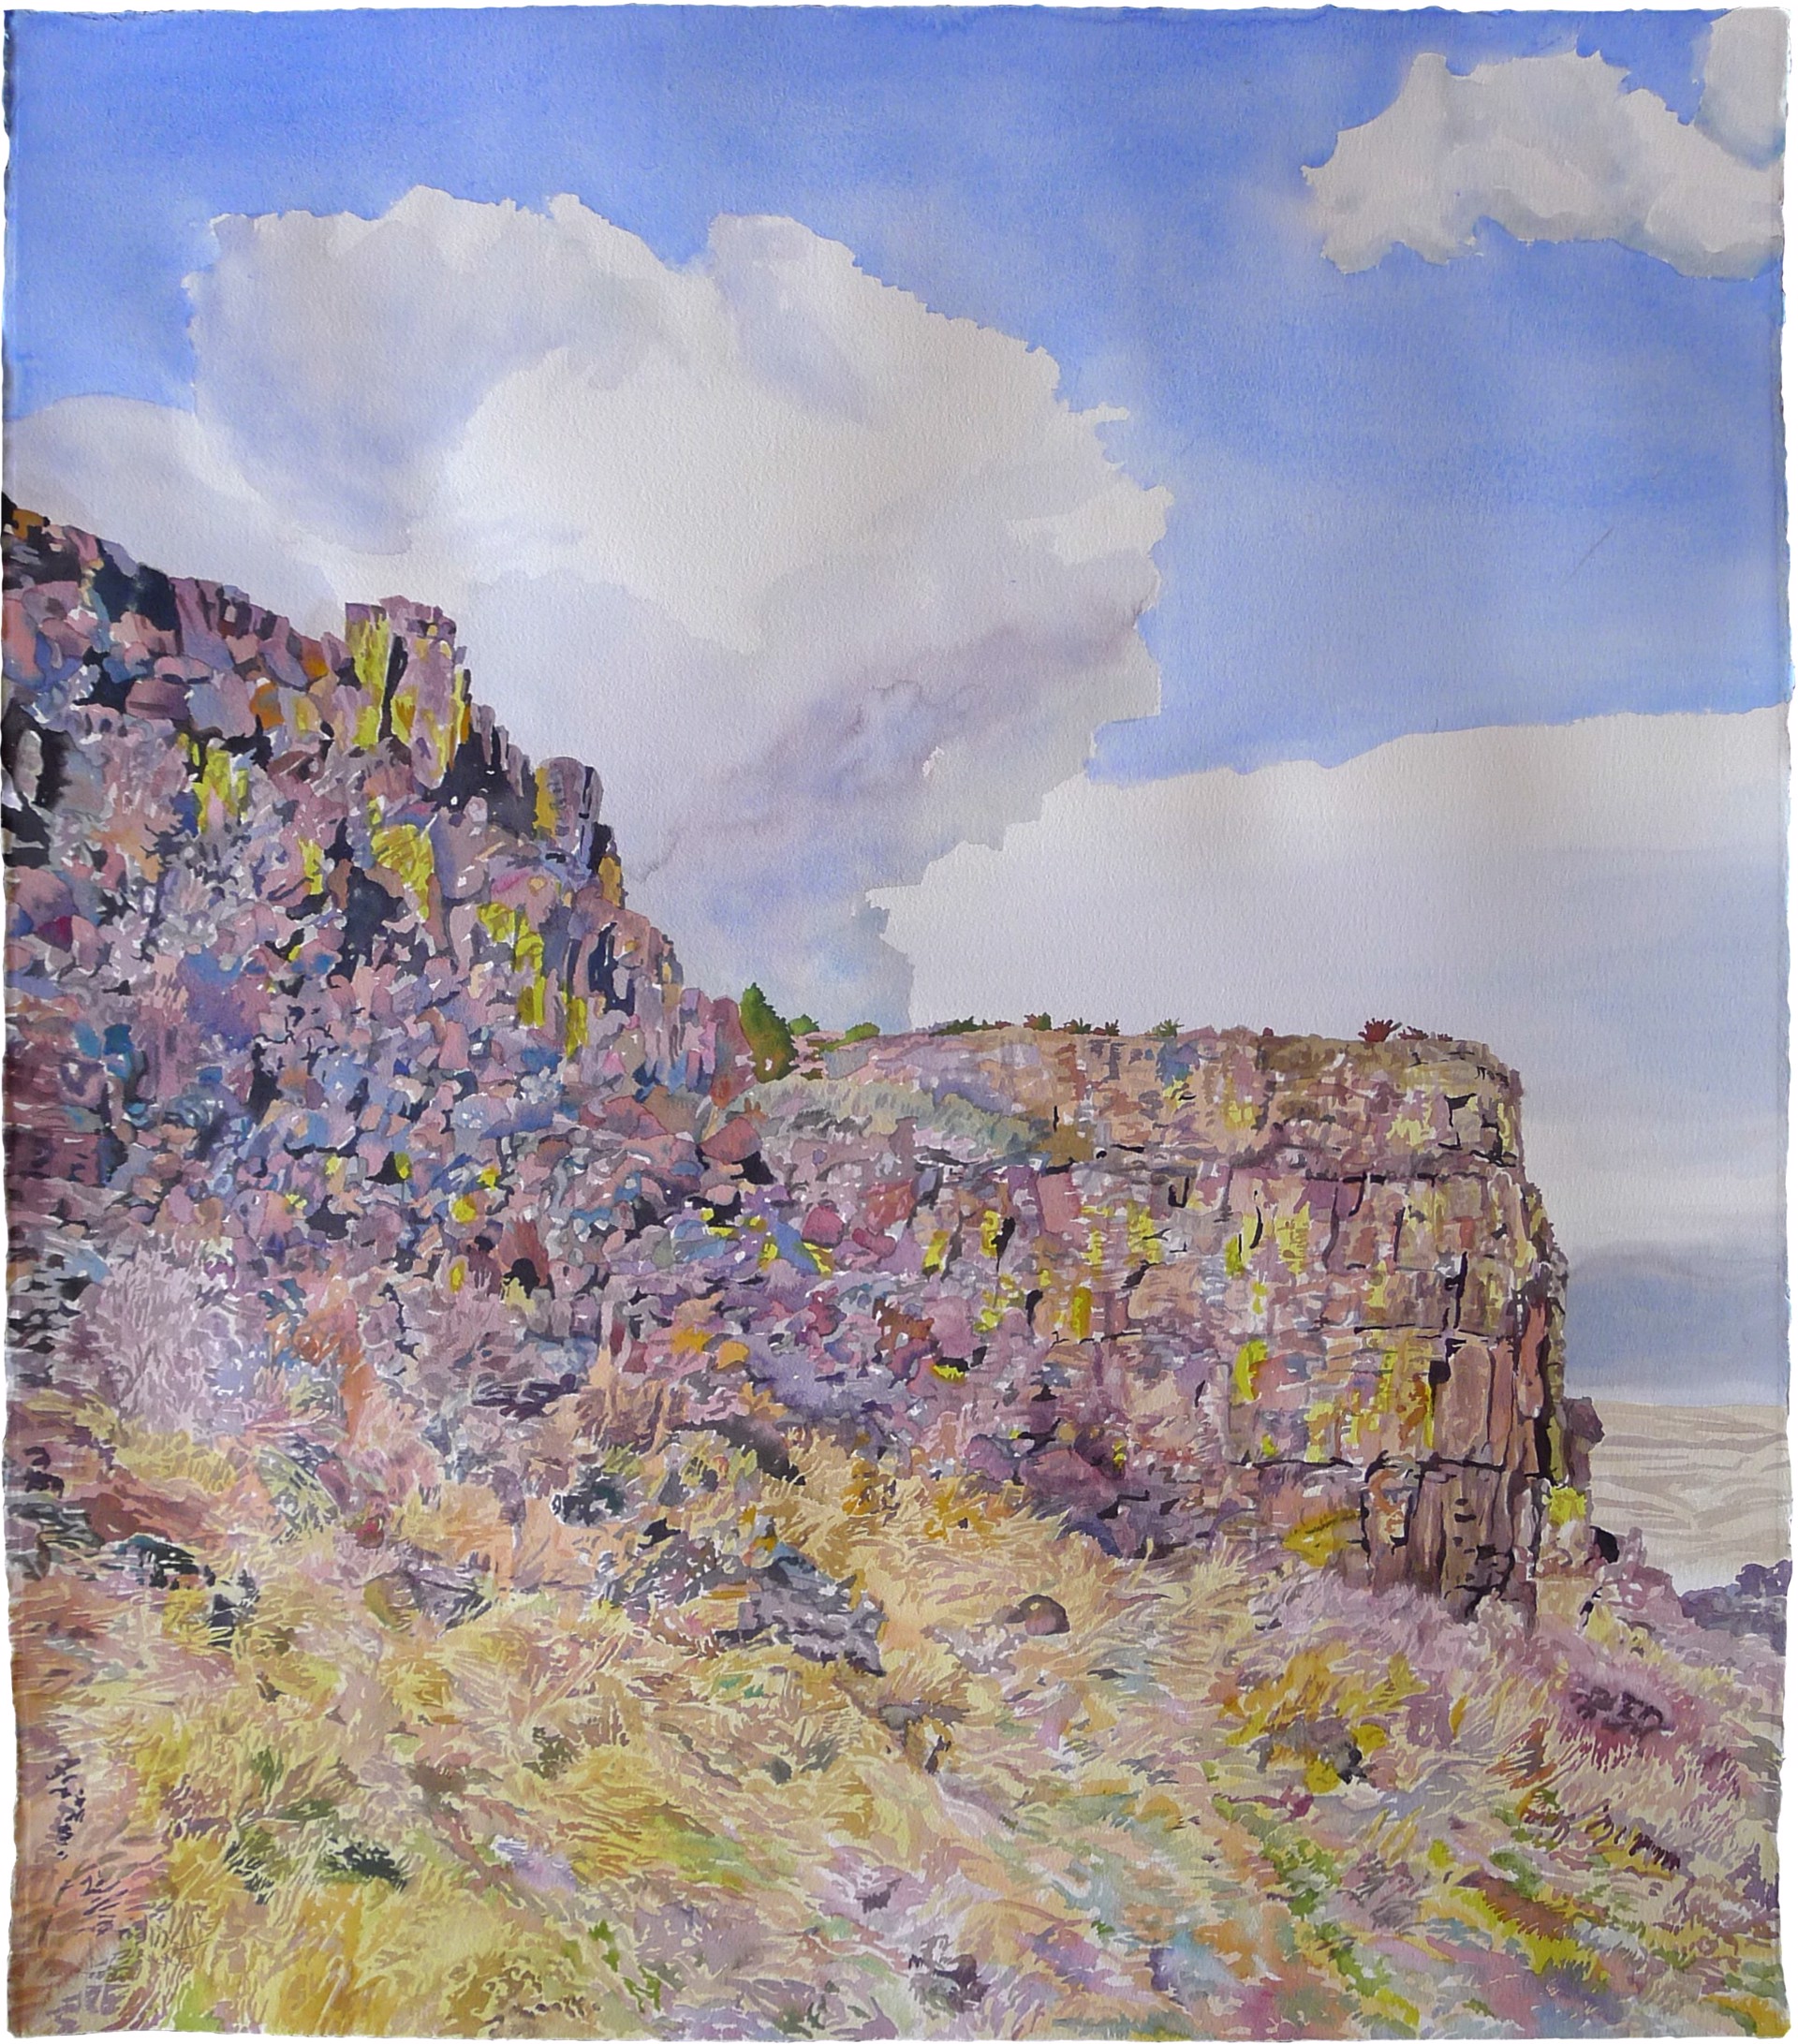 Basalt Outcrop by Divit Cardoza